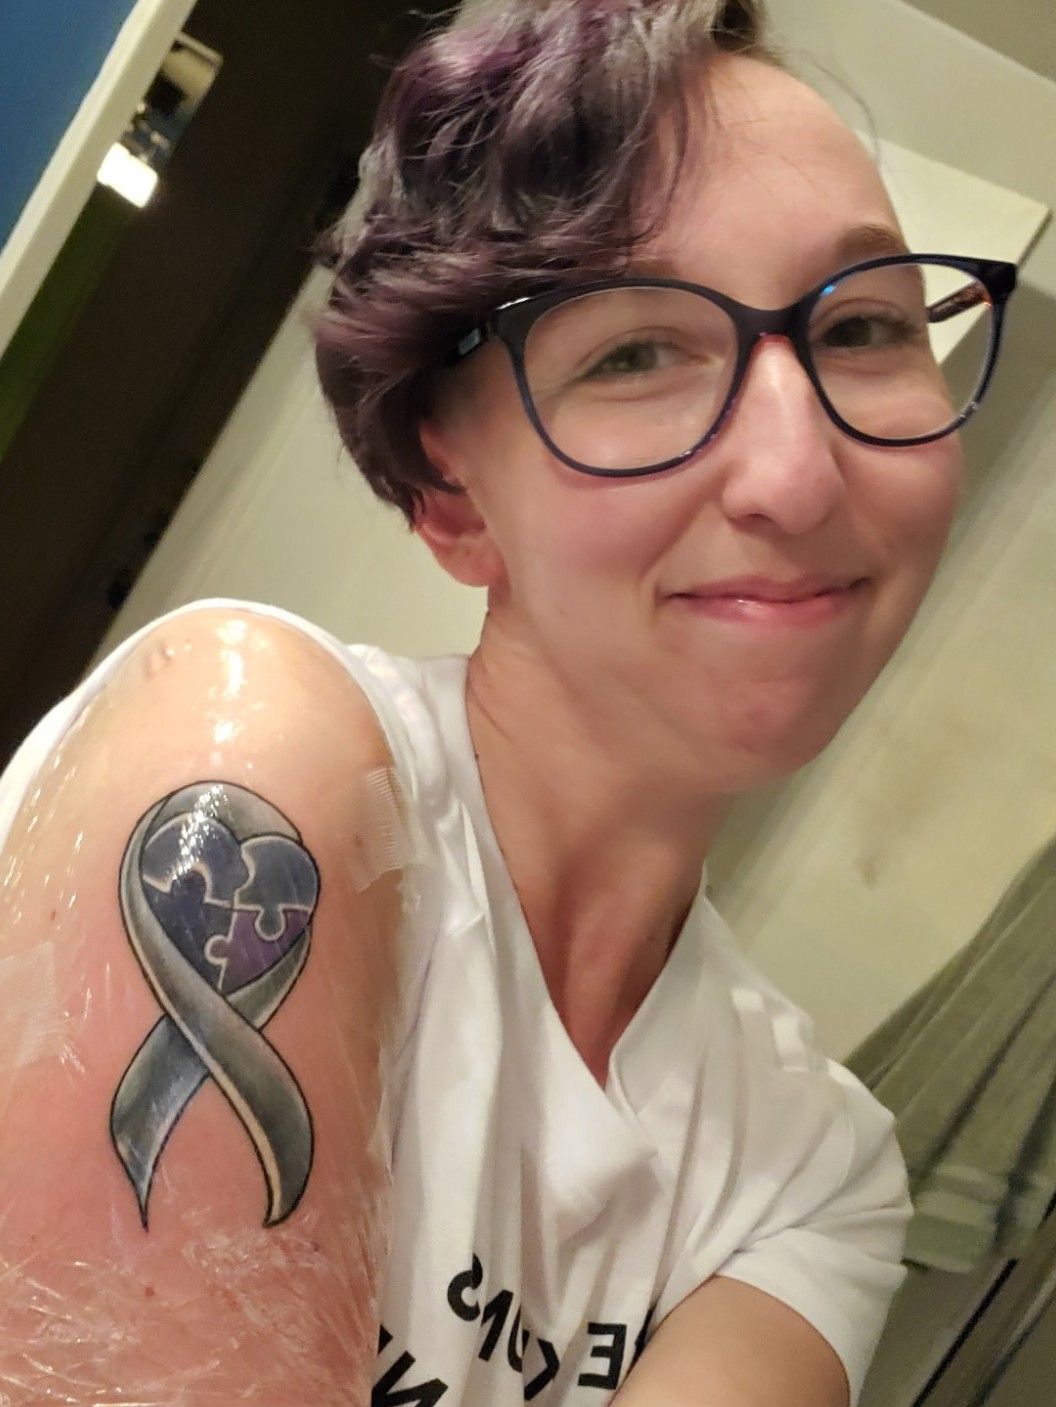 Tattoos serve as motivation for those battling depression mental illness